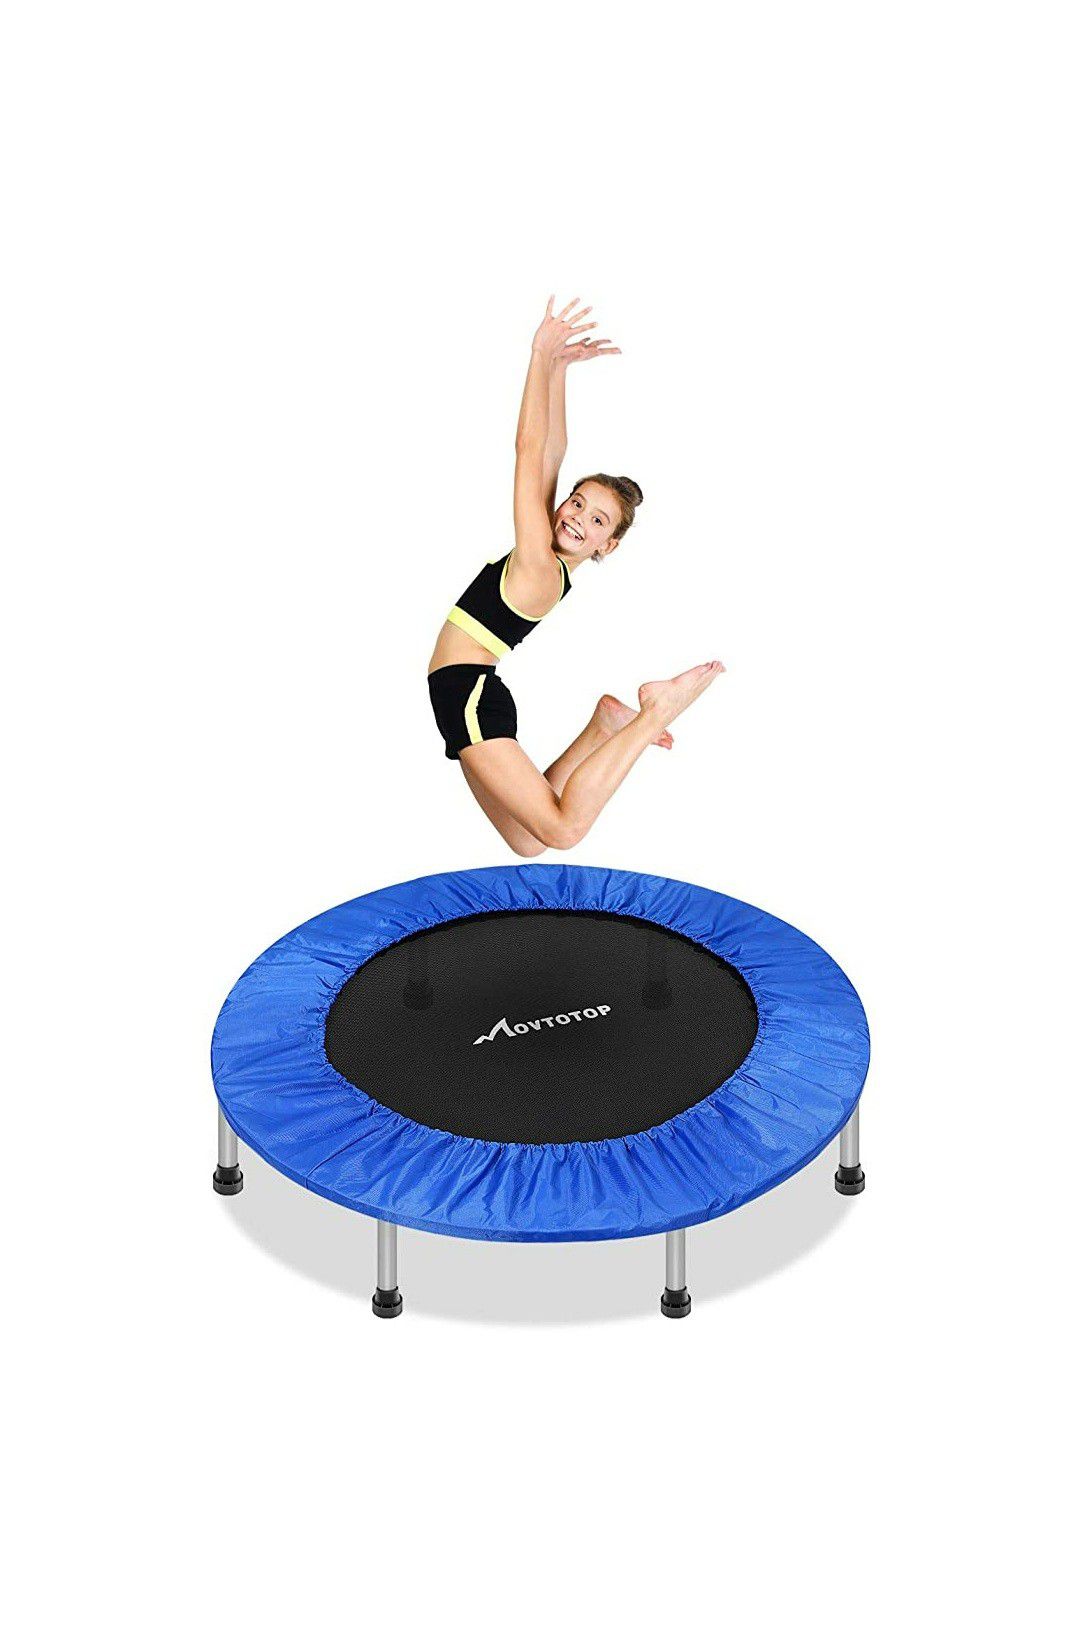 38 inch brand new foldable trampoline